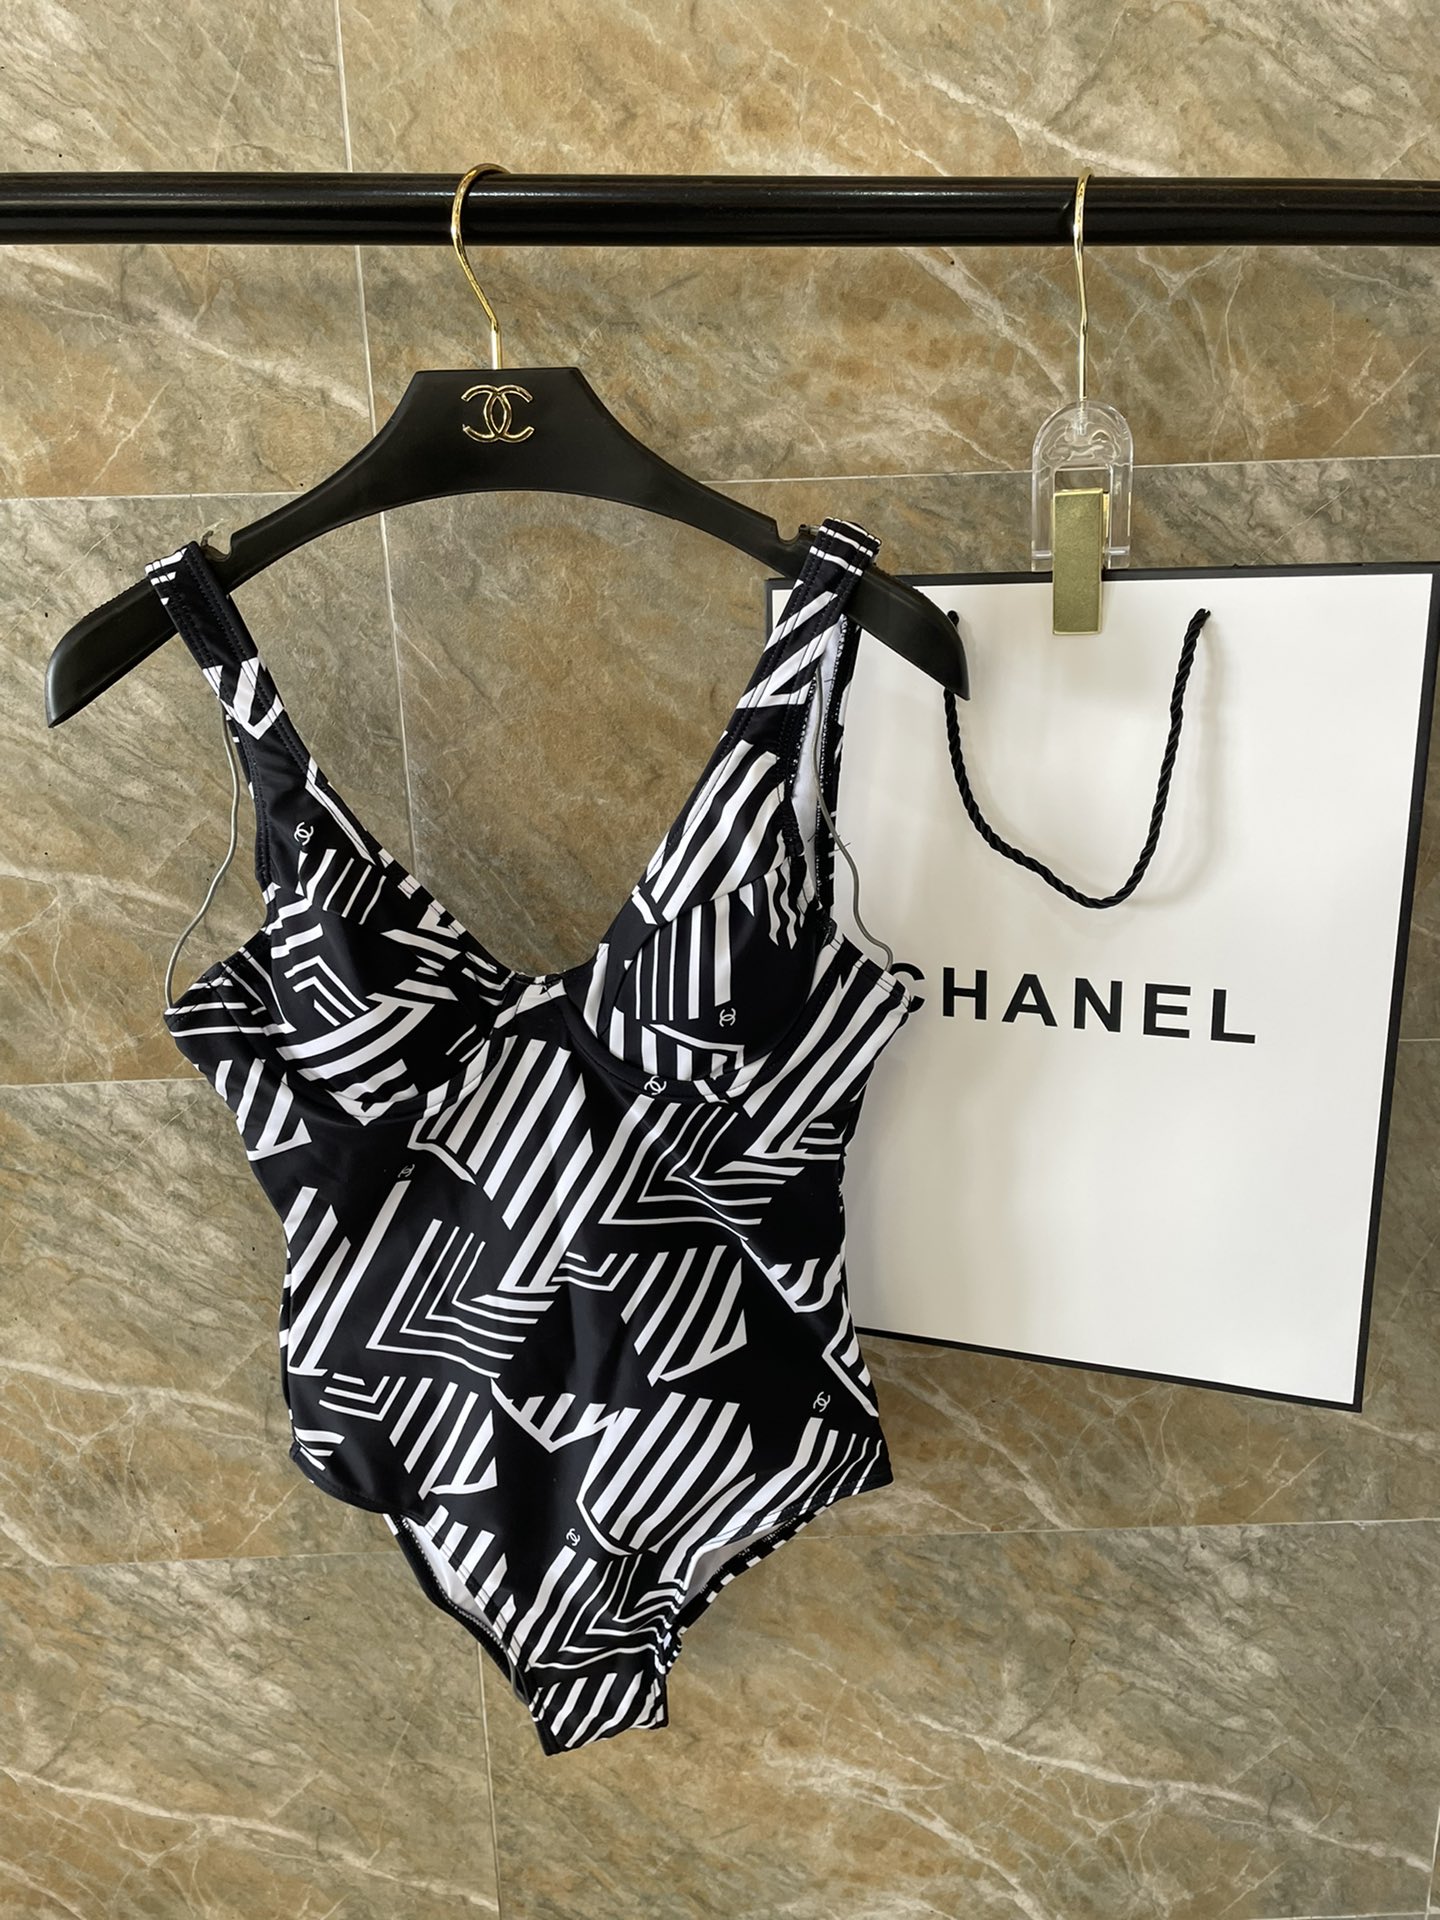 Chanel泳衣适合多种场景的游泳衣️海边游泳池温泉水上乐园漂流都可以内搭也完全可以连体设计遮肉显高挑腹